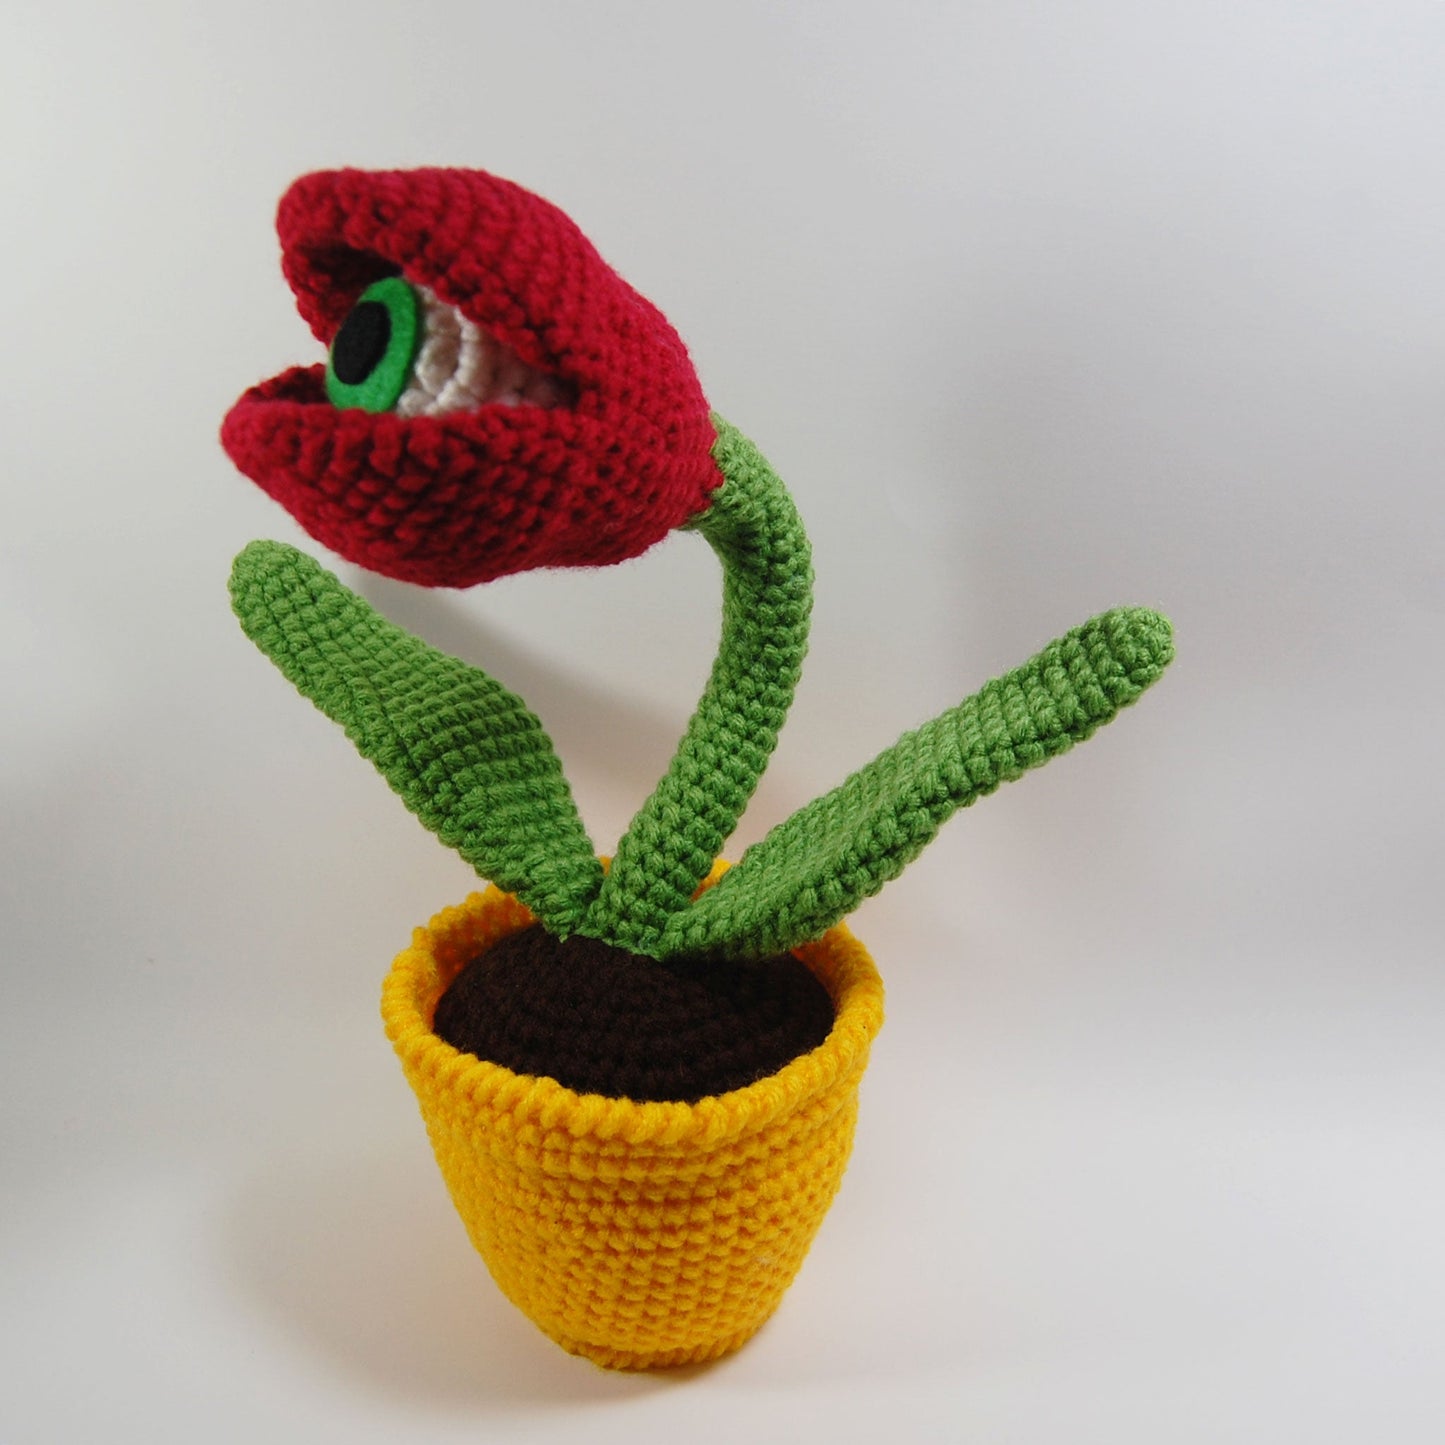 Eyeball Tulip Plant (made to order)